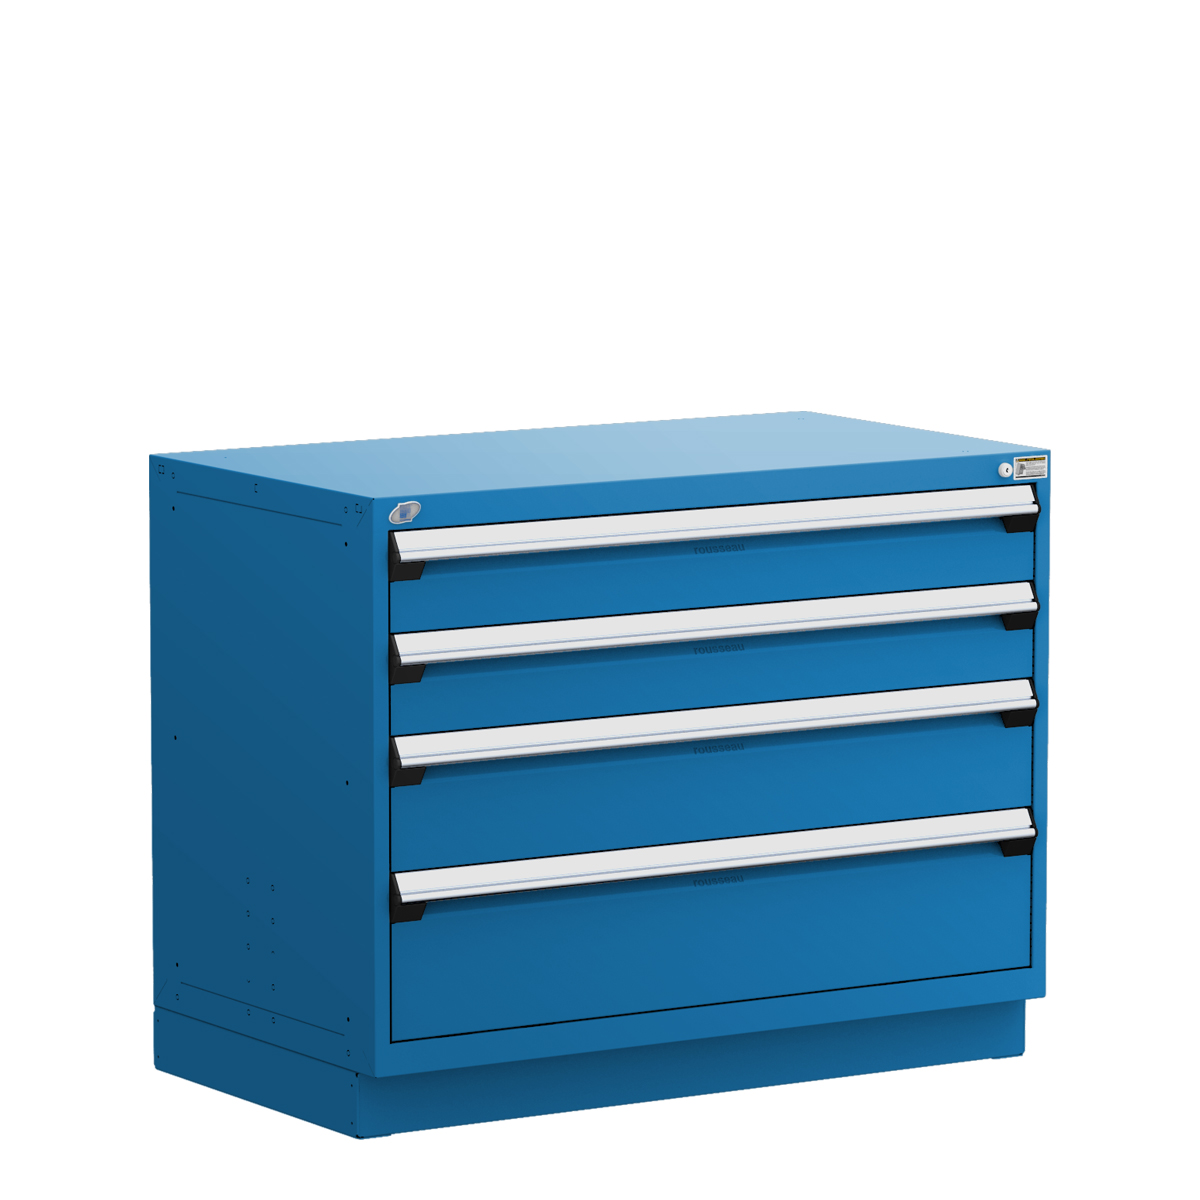 Stationary Toolbox | Buy Online Material Handling & Storage Equipment ...